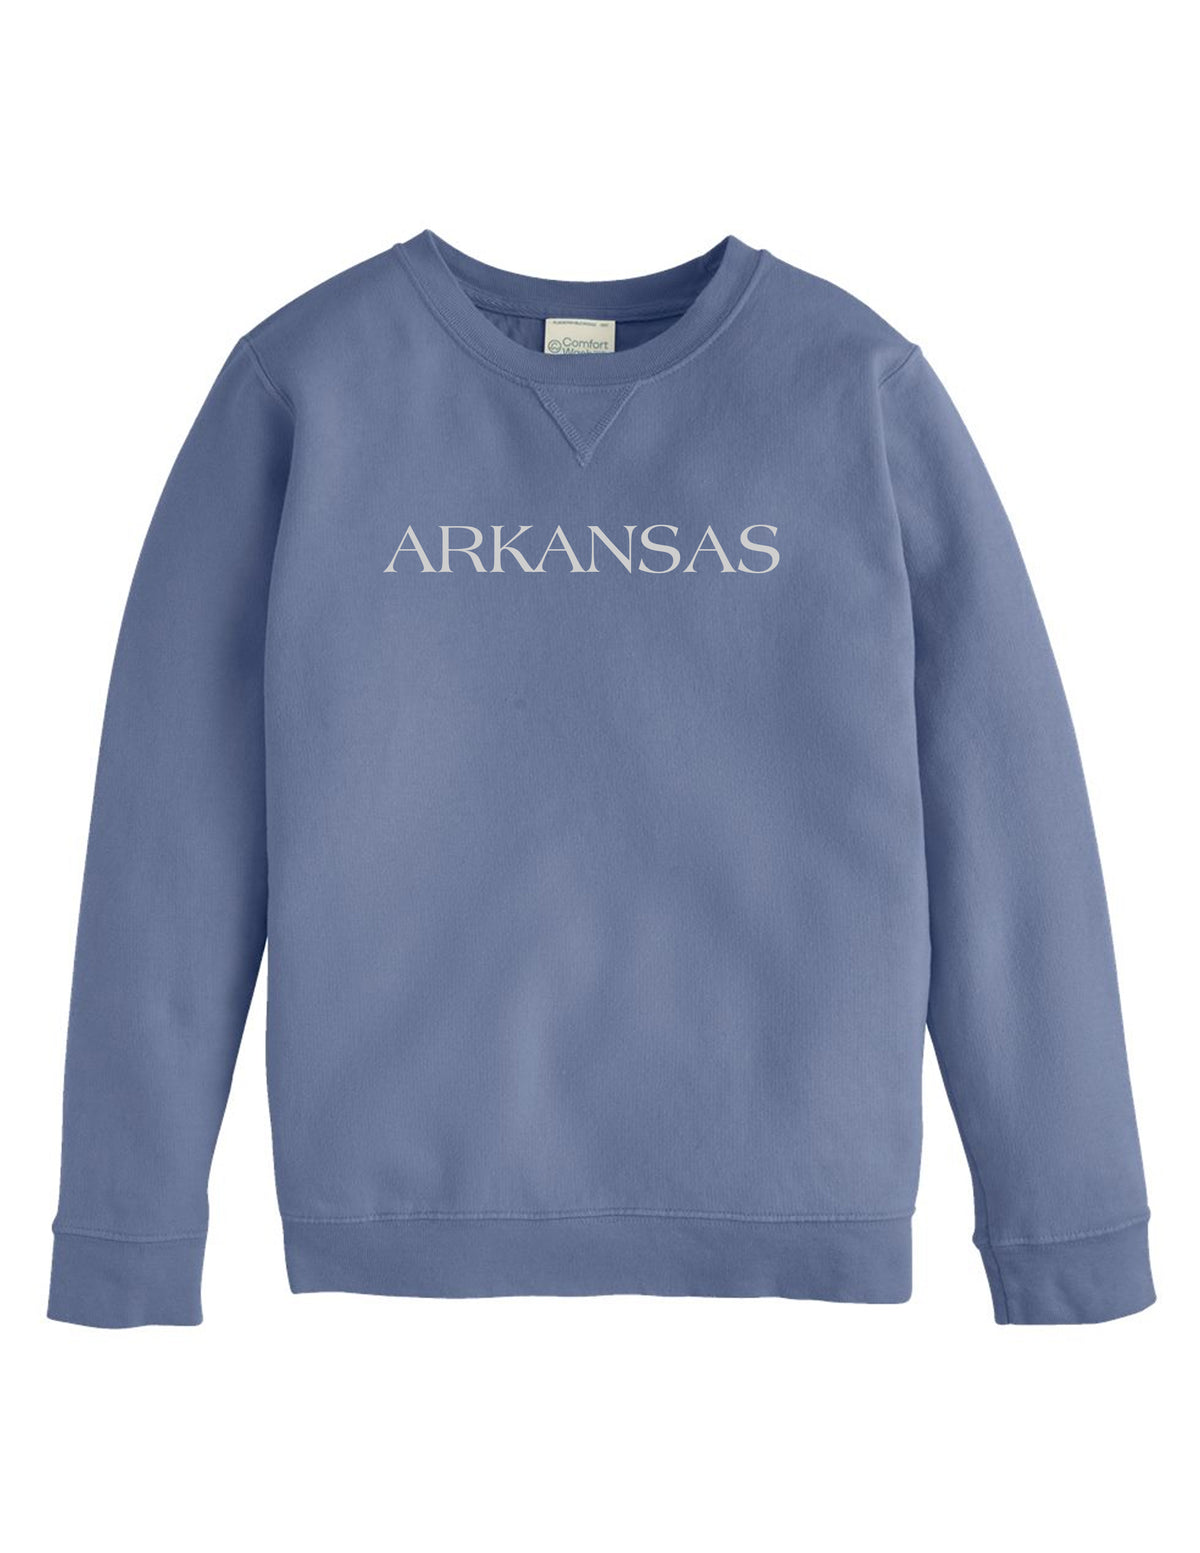 By The Sea Arkansas Youth Sweatshirt